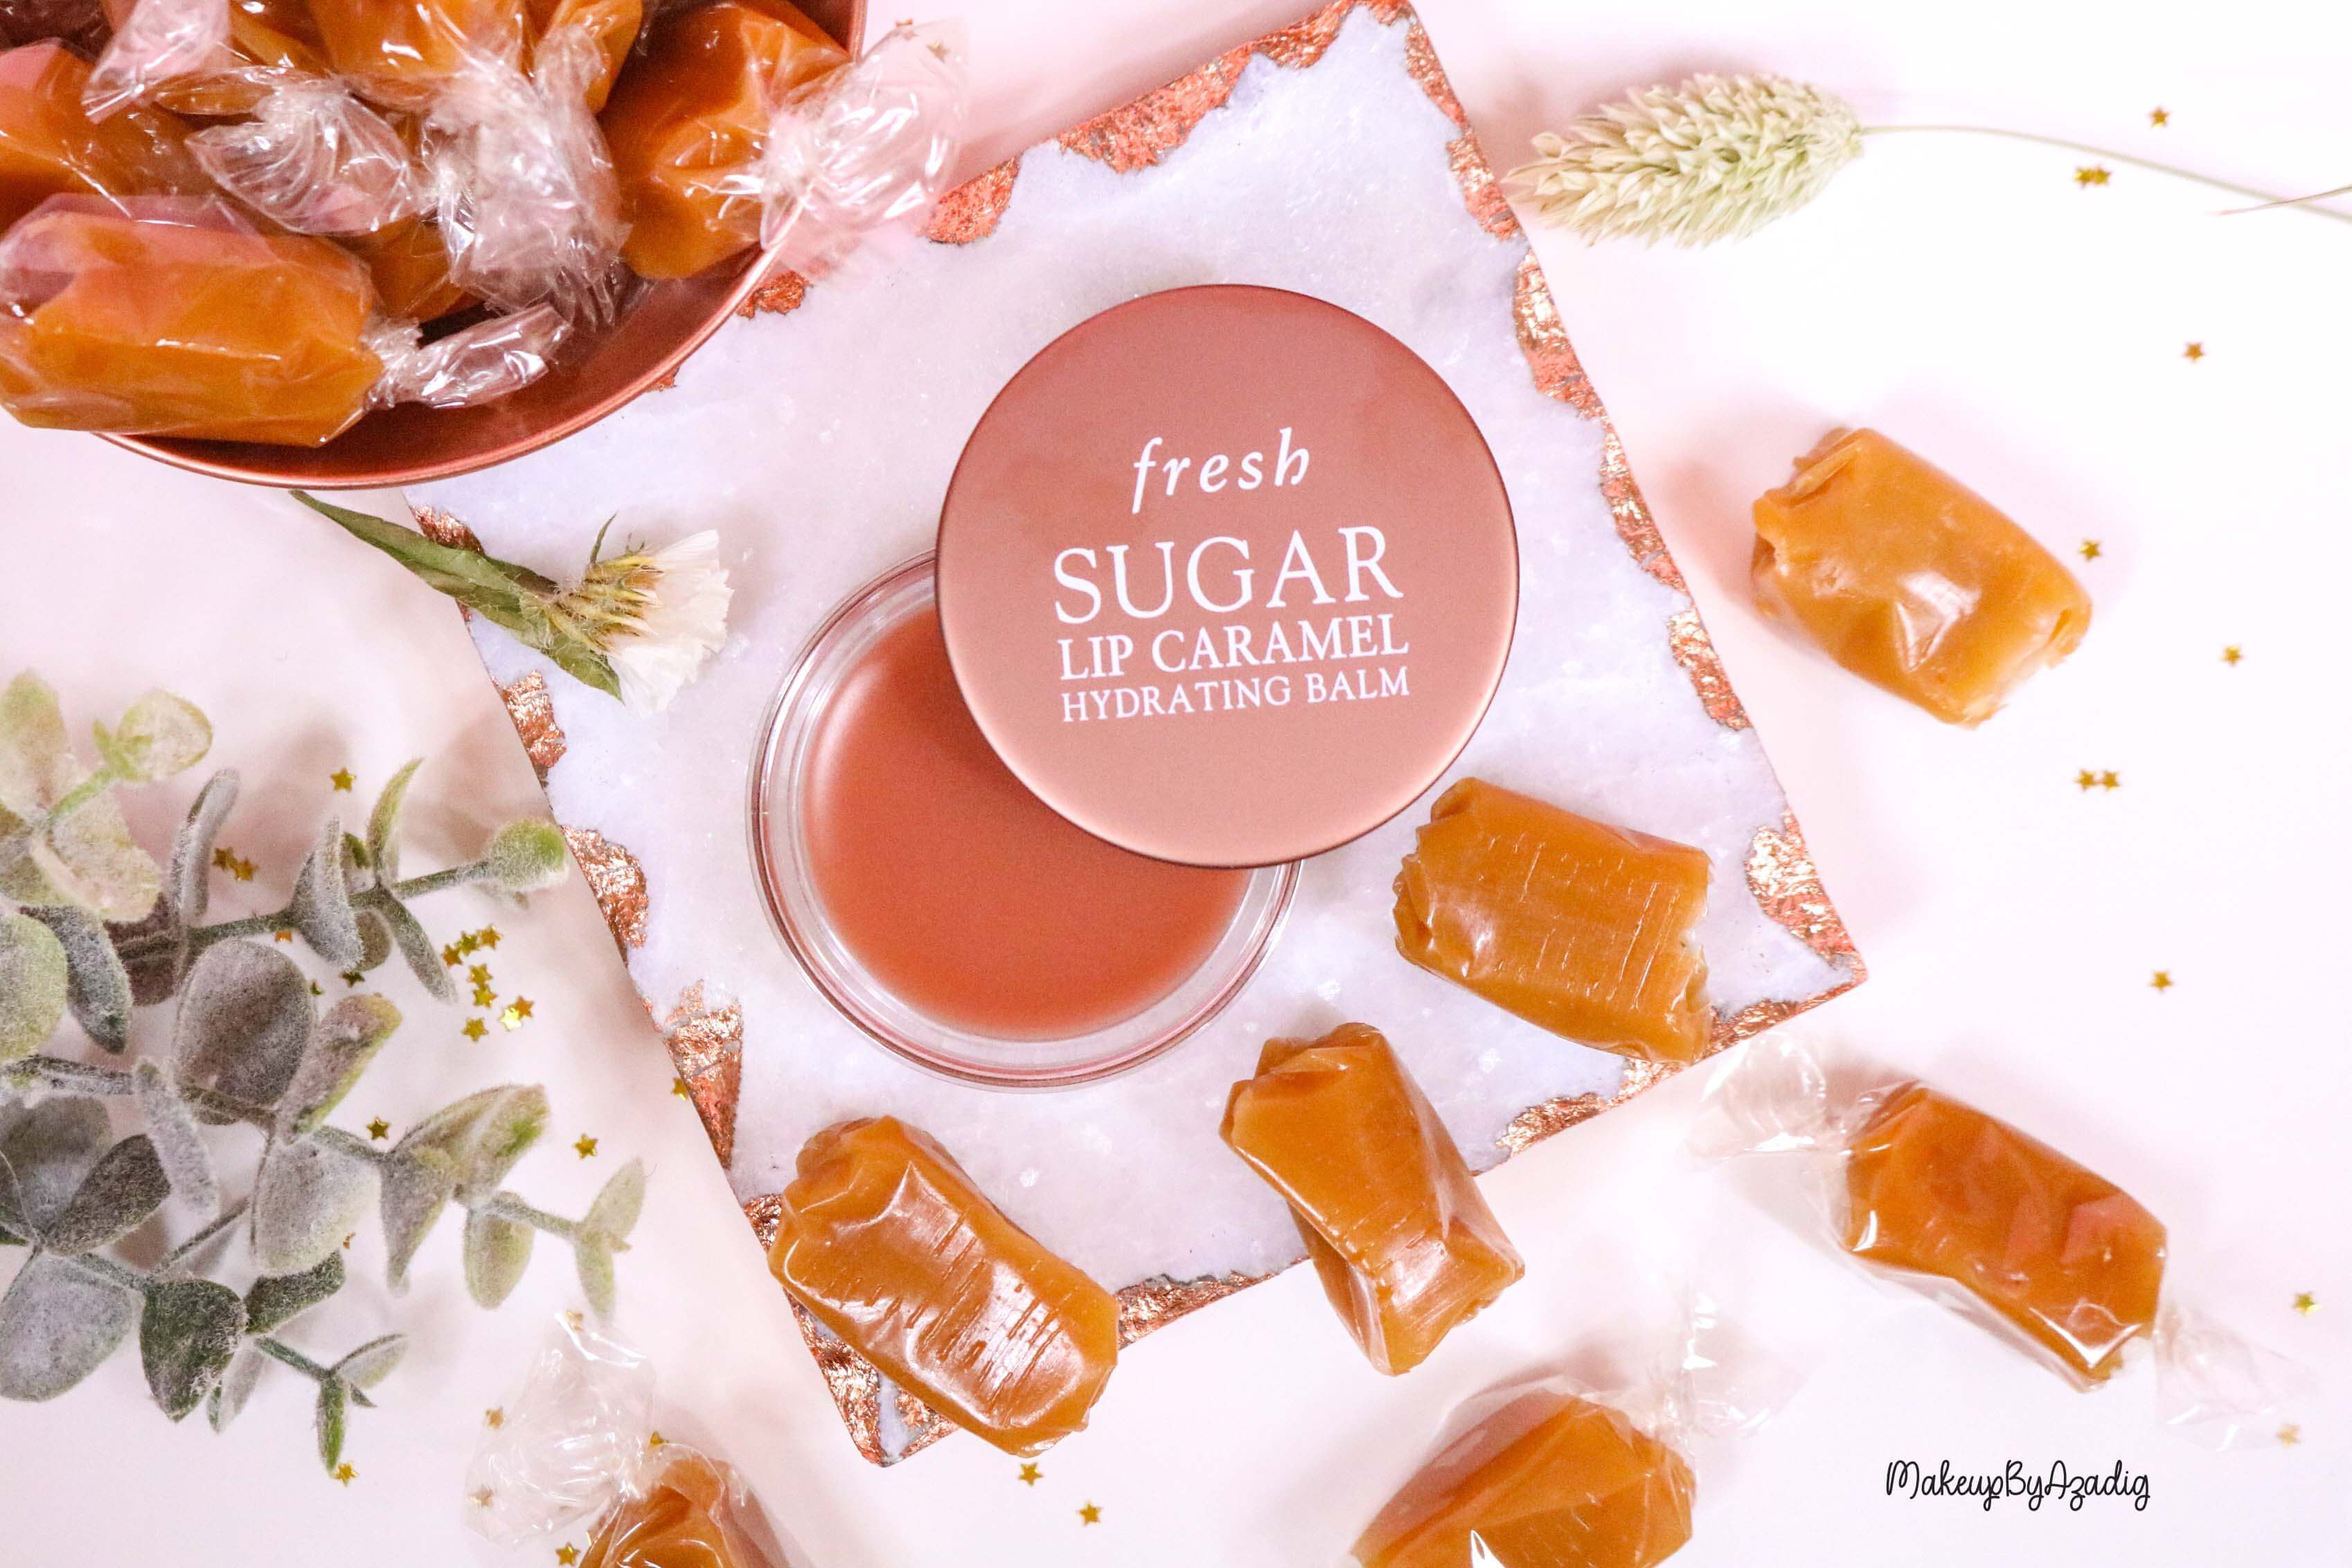 revue-baume-sucre-fresh-beauty-skincare-caramel-sugar-lip-caramel-sephora-makeupbyazadig-avis-prix-balm-miniature